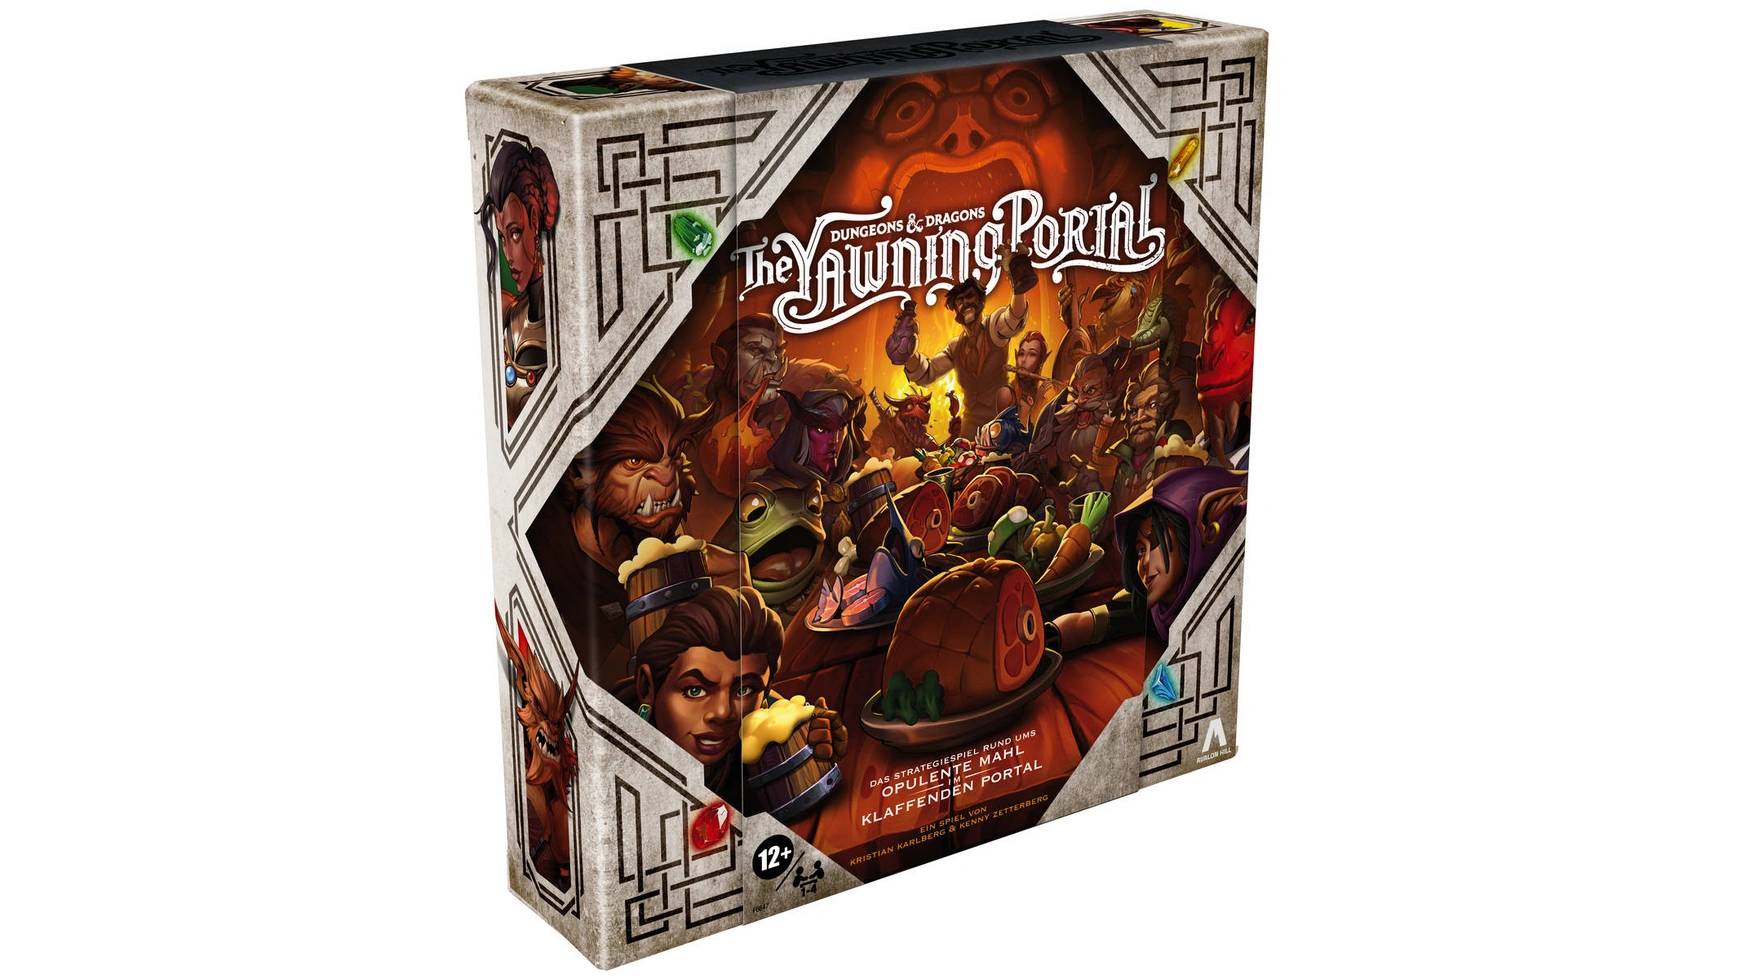 Dungeons & Dragons: The Yawning Portal (немецкое издание)